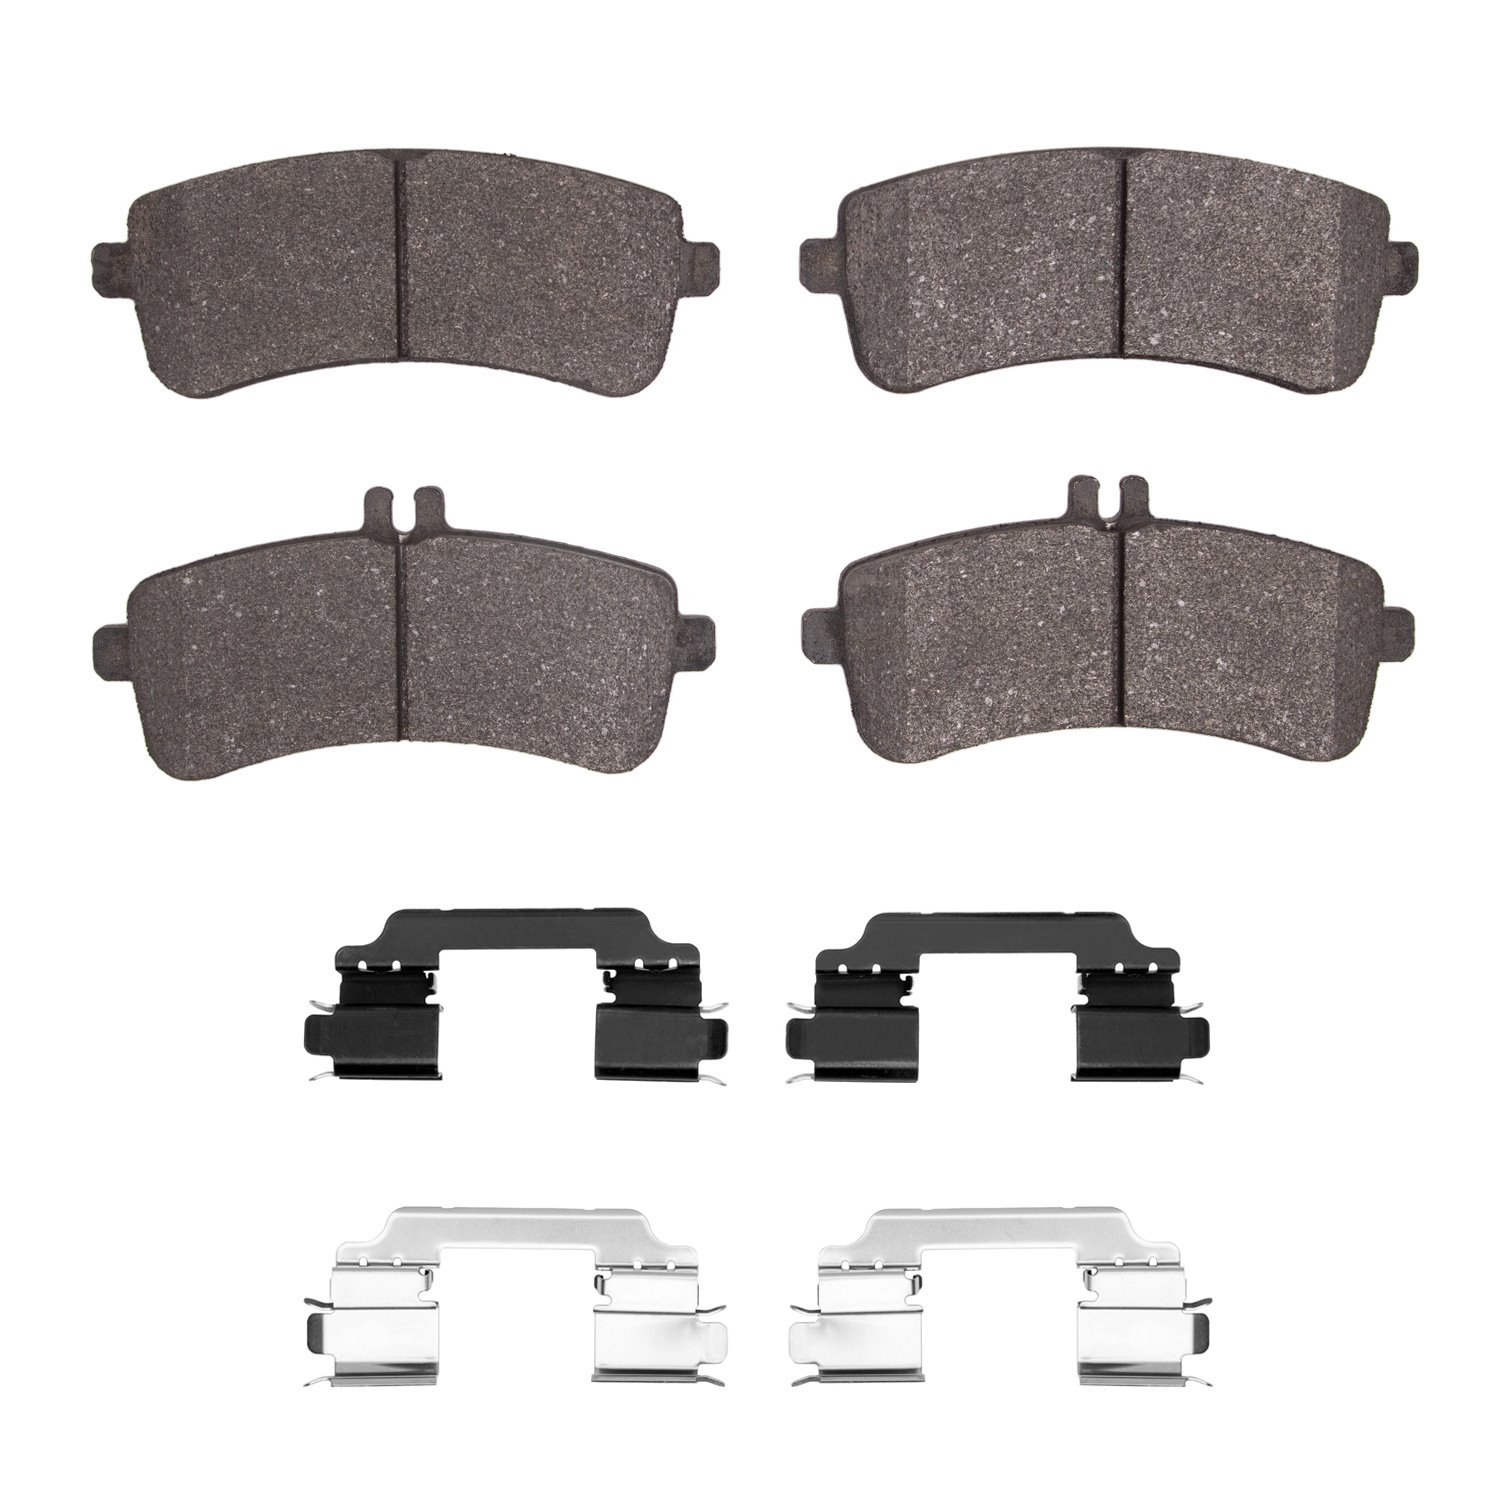 1551-1907-01 5000 Advanced Low-Metallic Brake Pads & Hardware Kit, 2014-2021 Mercedes-Benz, Position: Rear